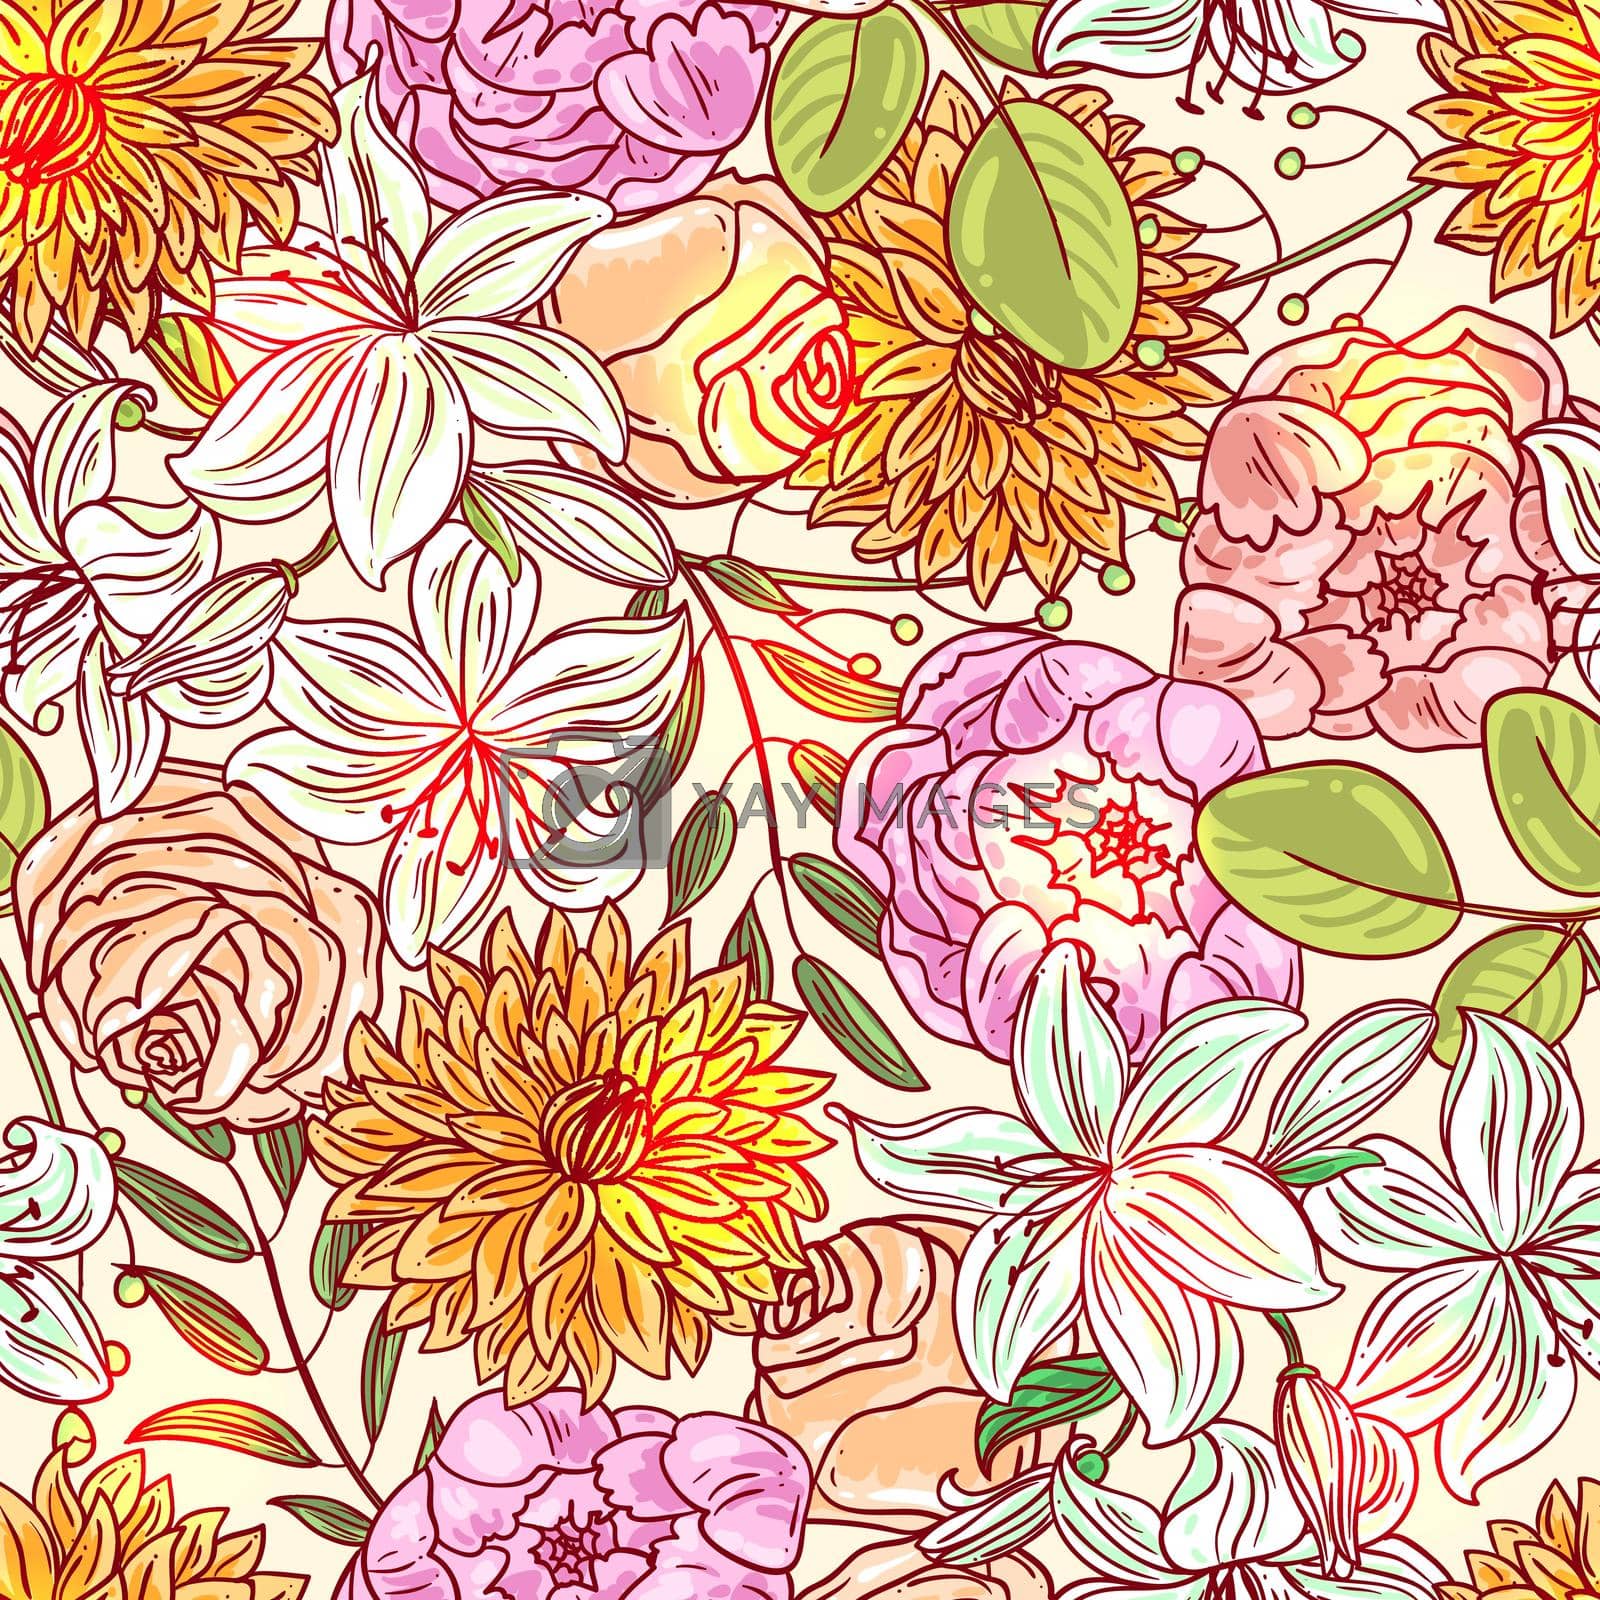 Royalty free image of decorative floral pattern by steshnikova